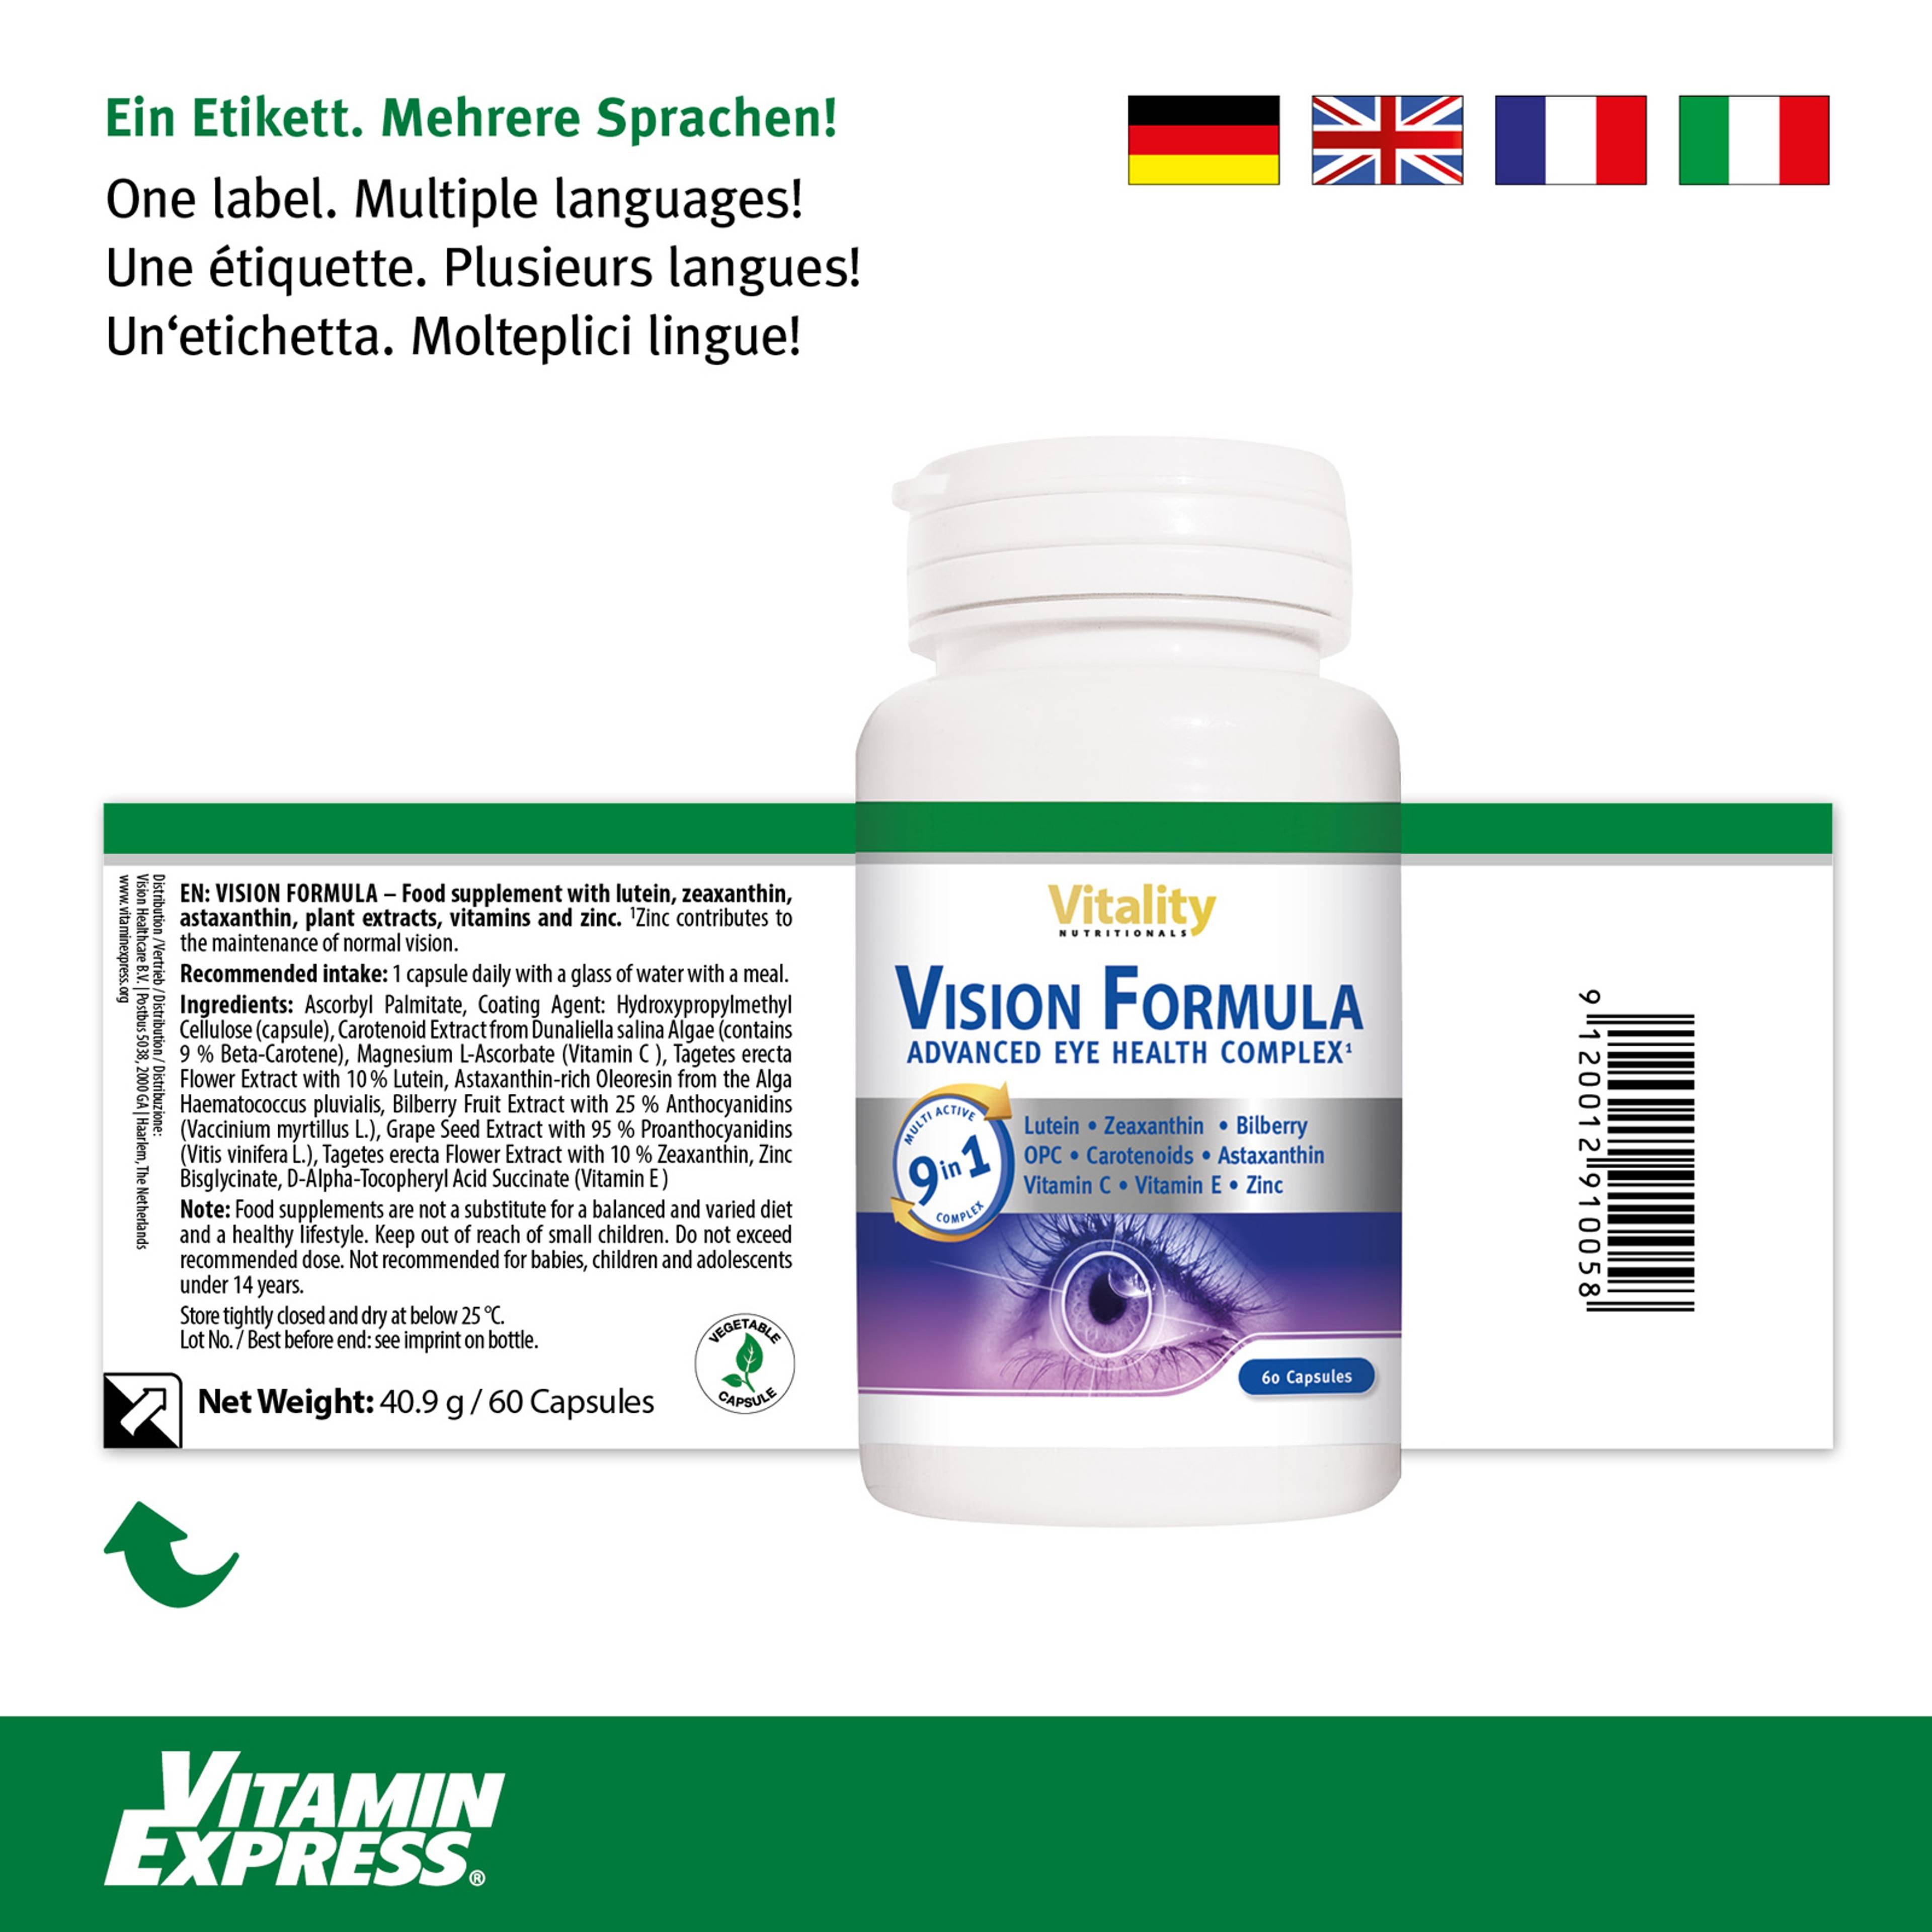 Vision-Formula-Advanced-Eye-Health-Complex-60capsules_40,9g_Packshot-Dose-mit-Etikett-multilingual+Flaggen+VE-Footer_1600x1600px_72dpi_20230602.jpg